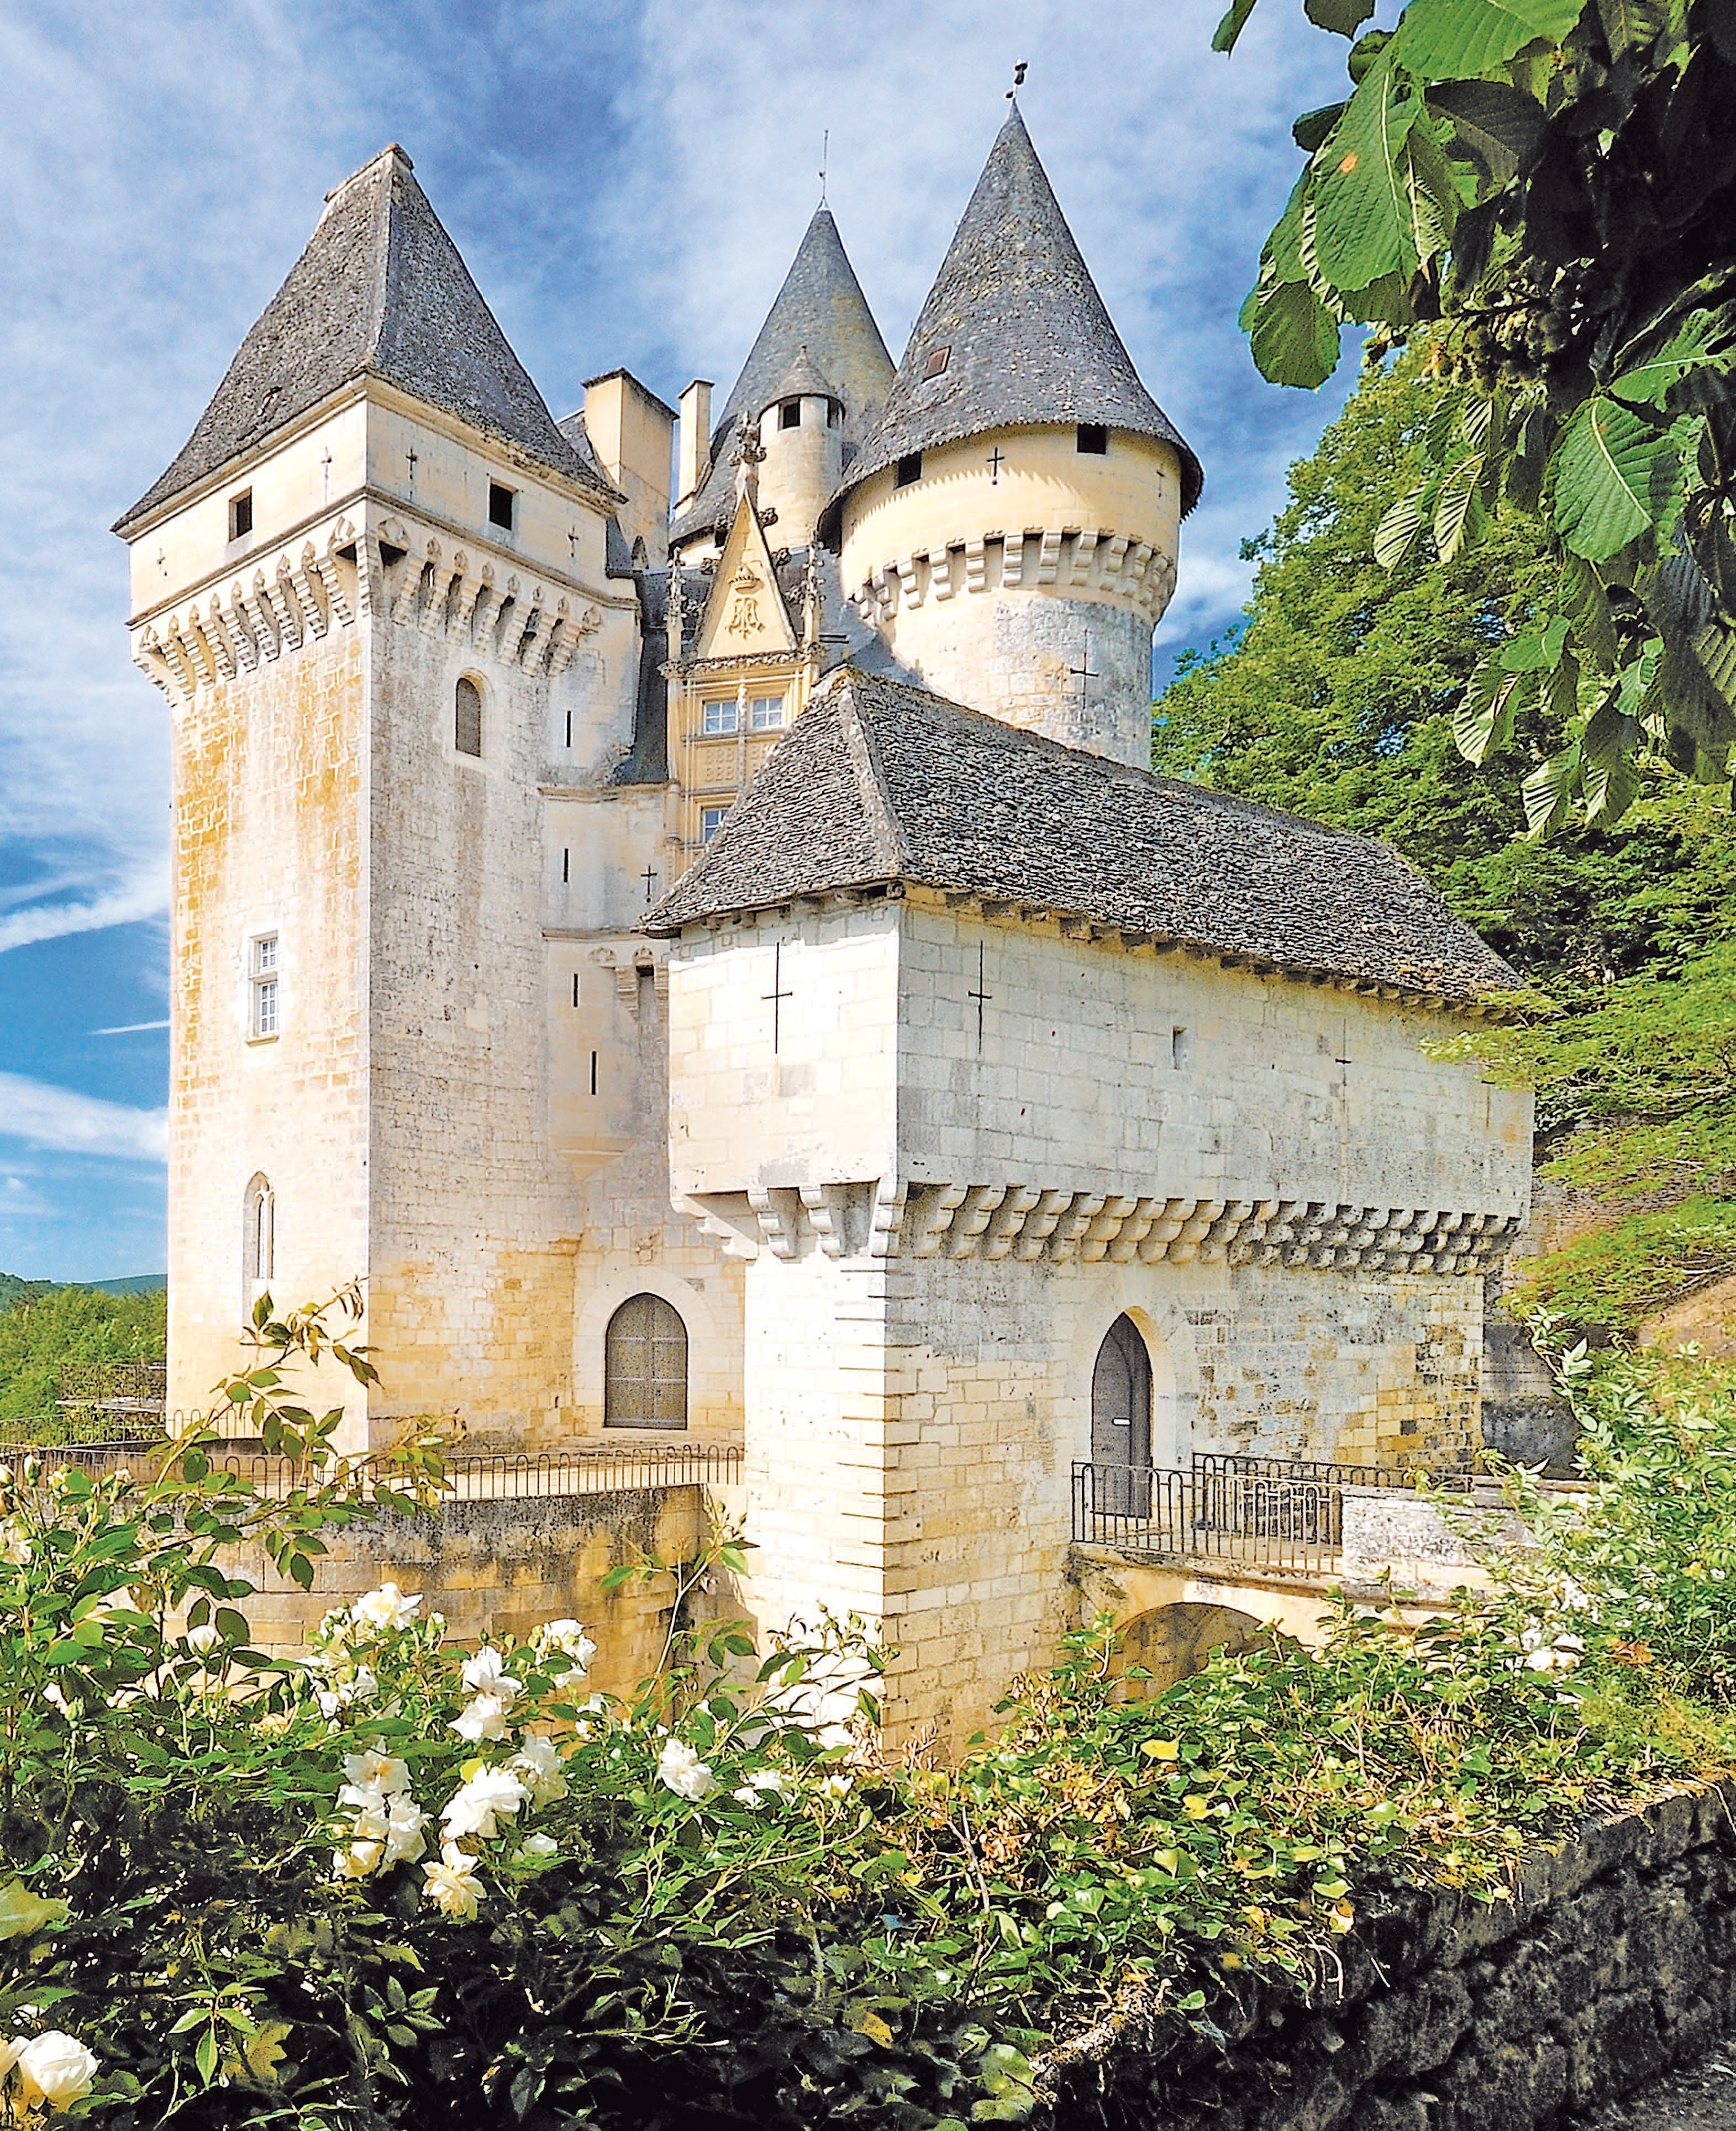 The discrete luxury of a 15th century castle